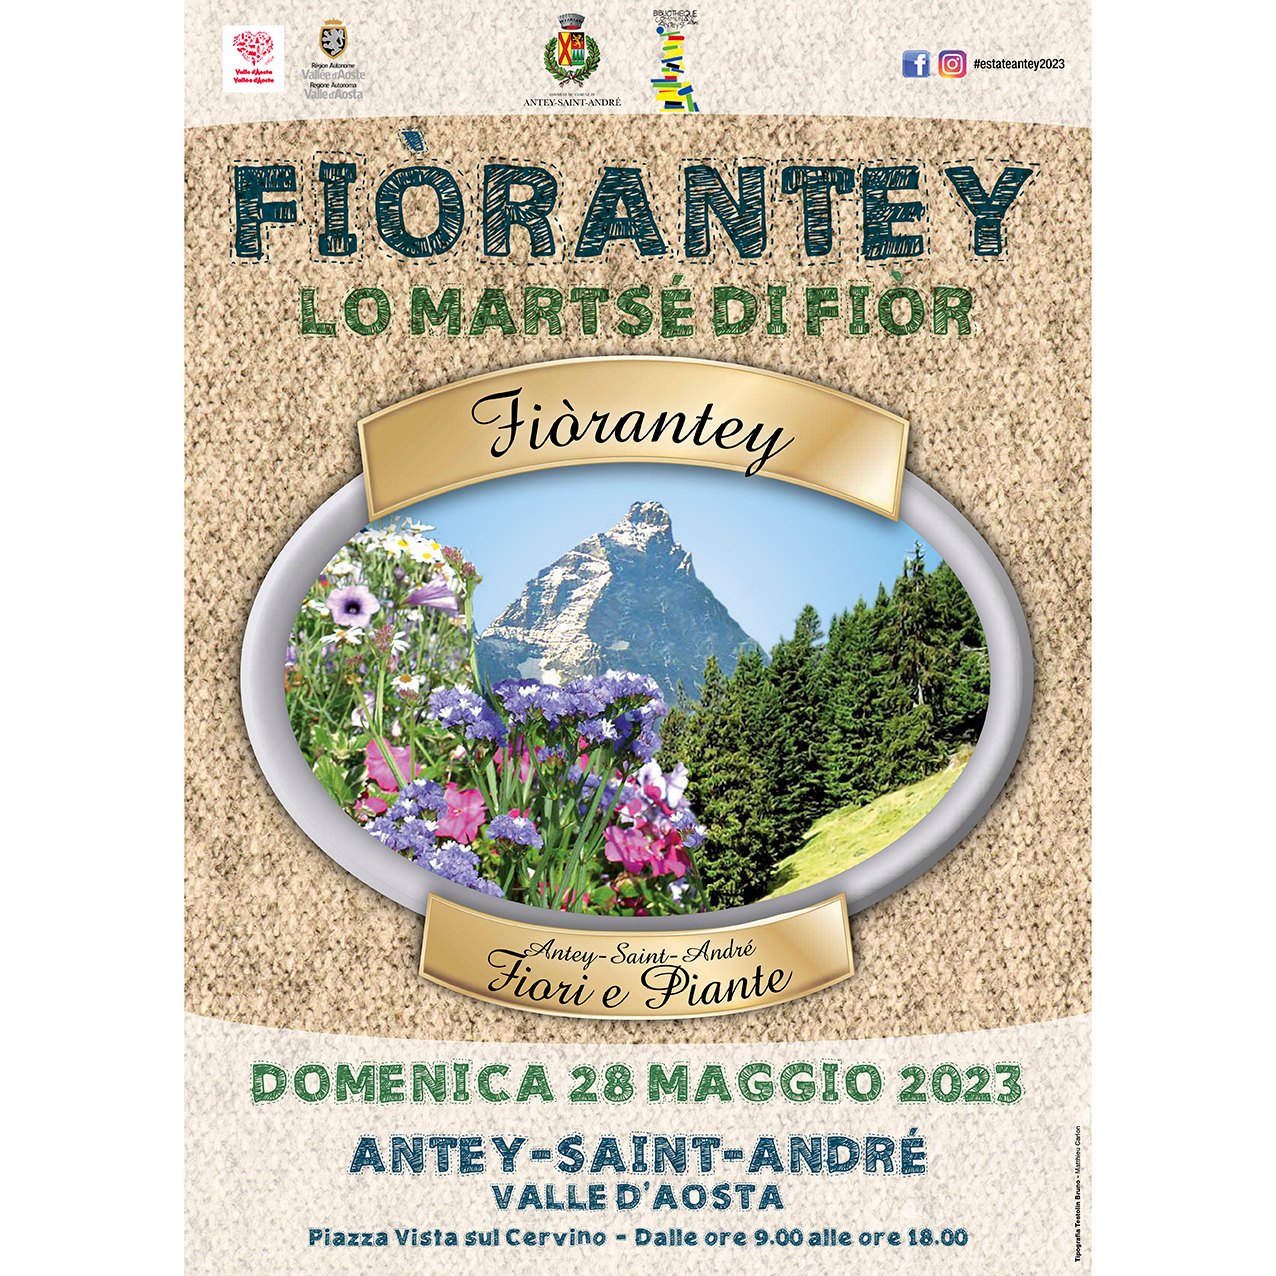 Fiorentey